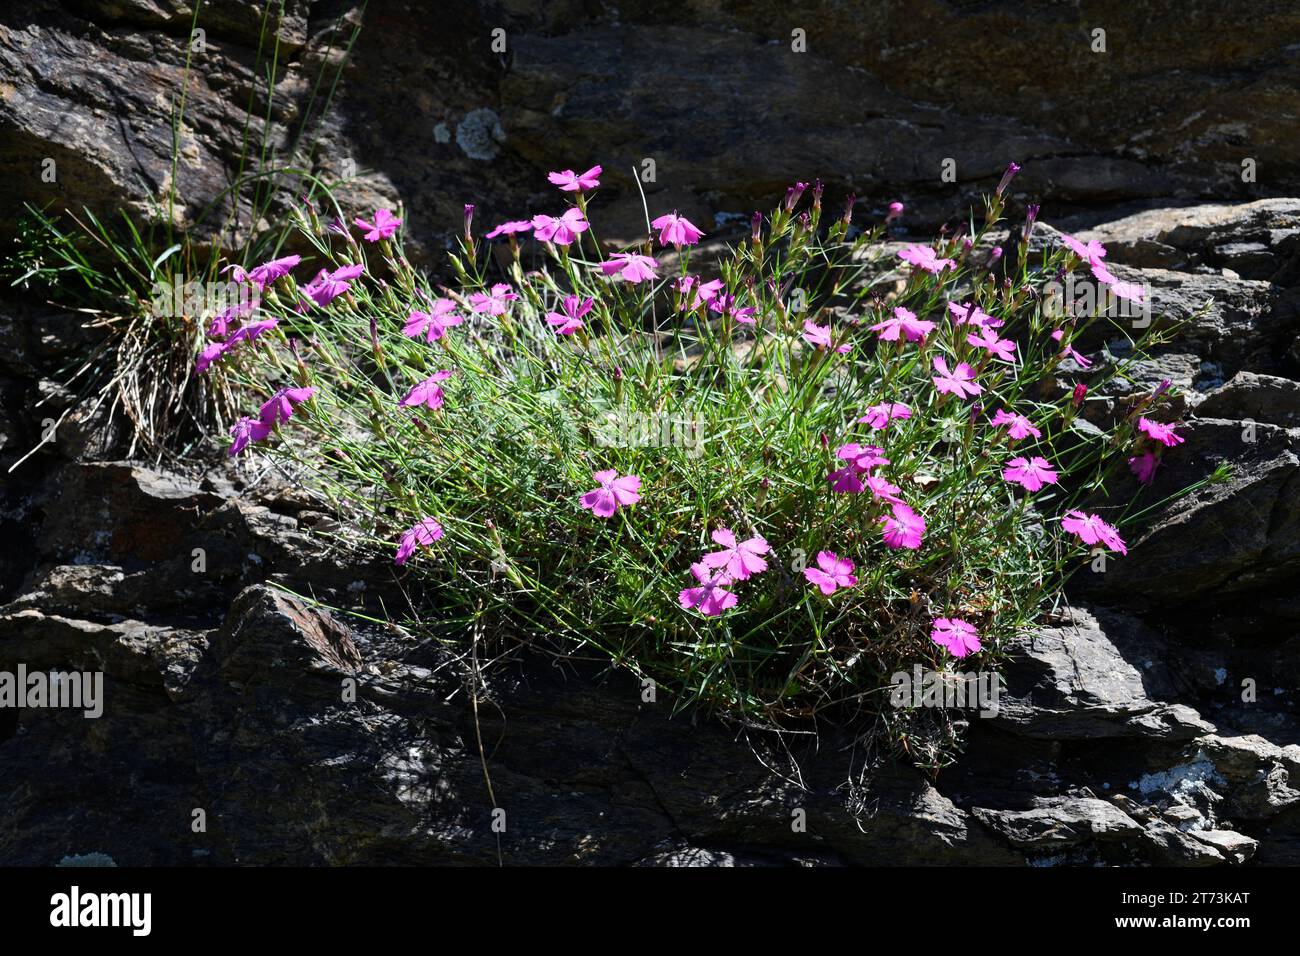 Dianthus seguieri cadevallii is a perennial plant endemic to Montseny Biosphere Reserve. This photo was taken in Montseny, Barcelona, Catalonia, Spain Stock Photo